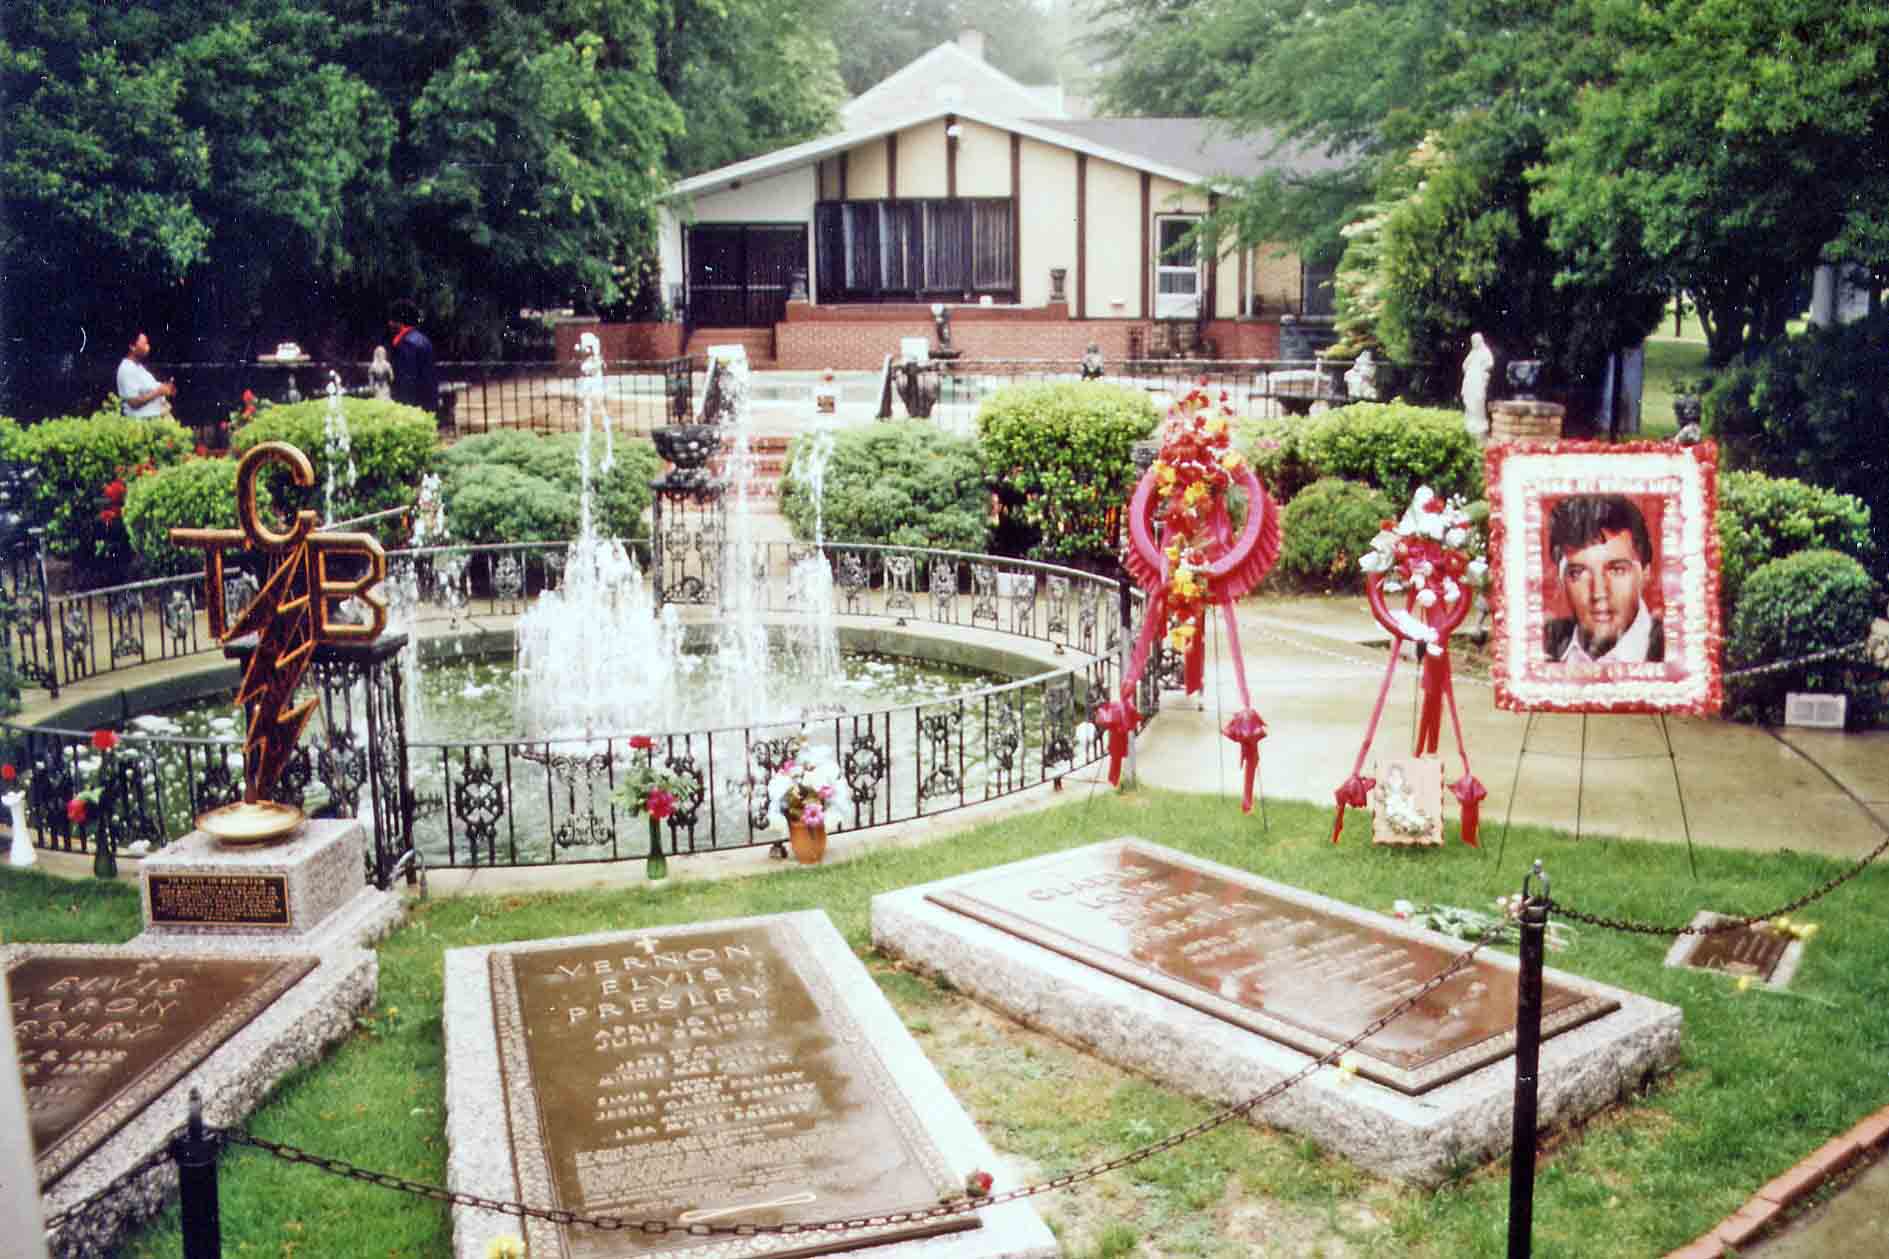 Graceland, Memphys - Elvis Presley grave